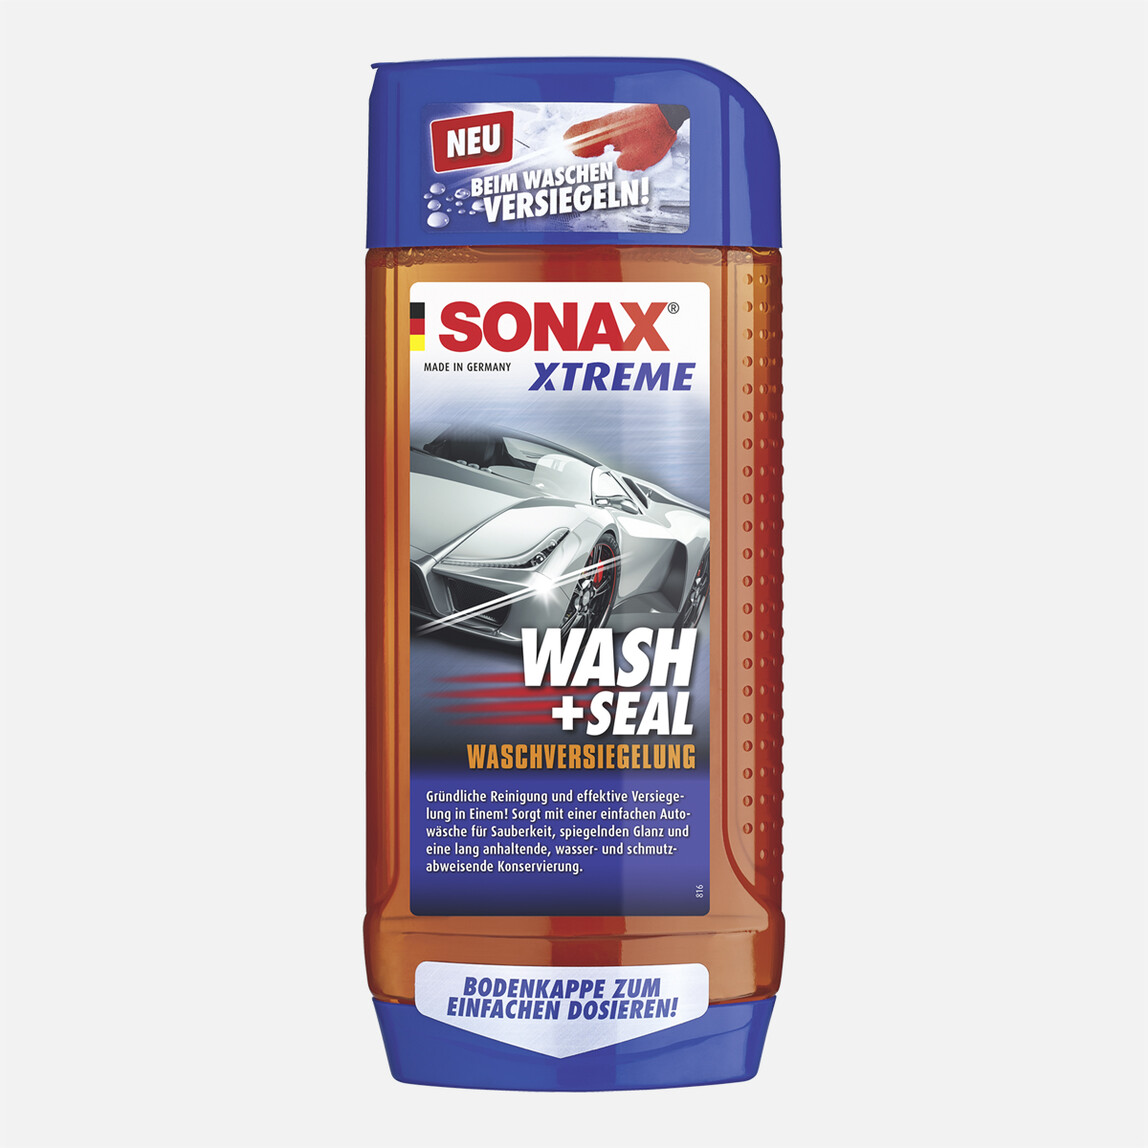    Sonax Xtreme Wash+Seal Koruma-Parlatma Şampuanı  